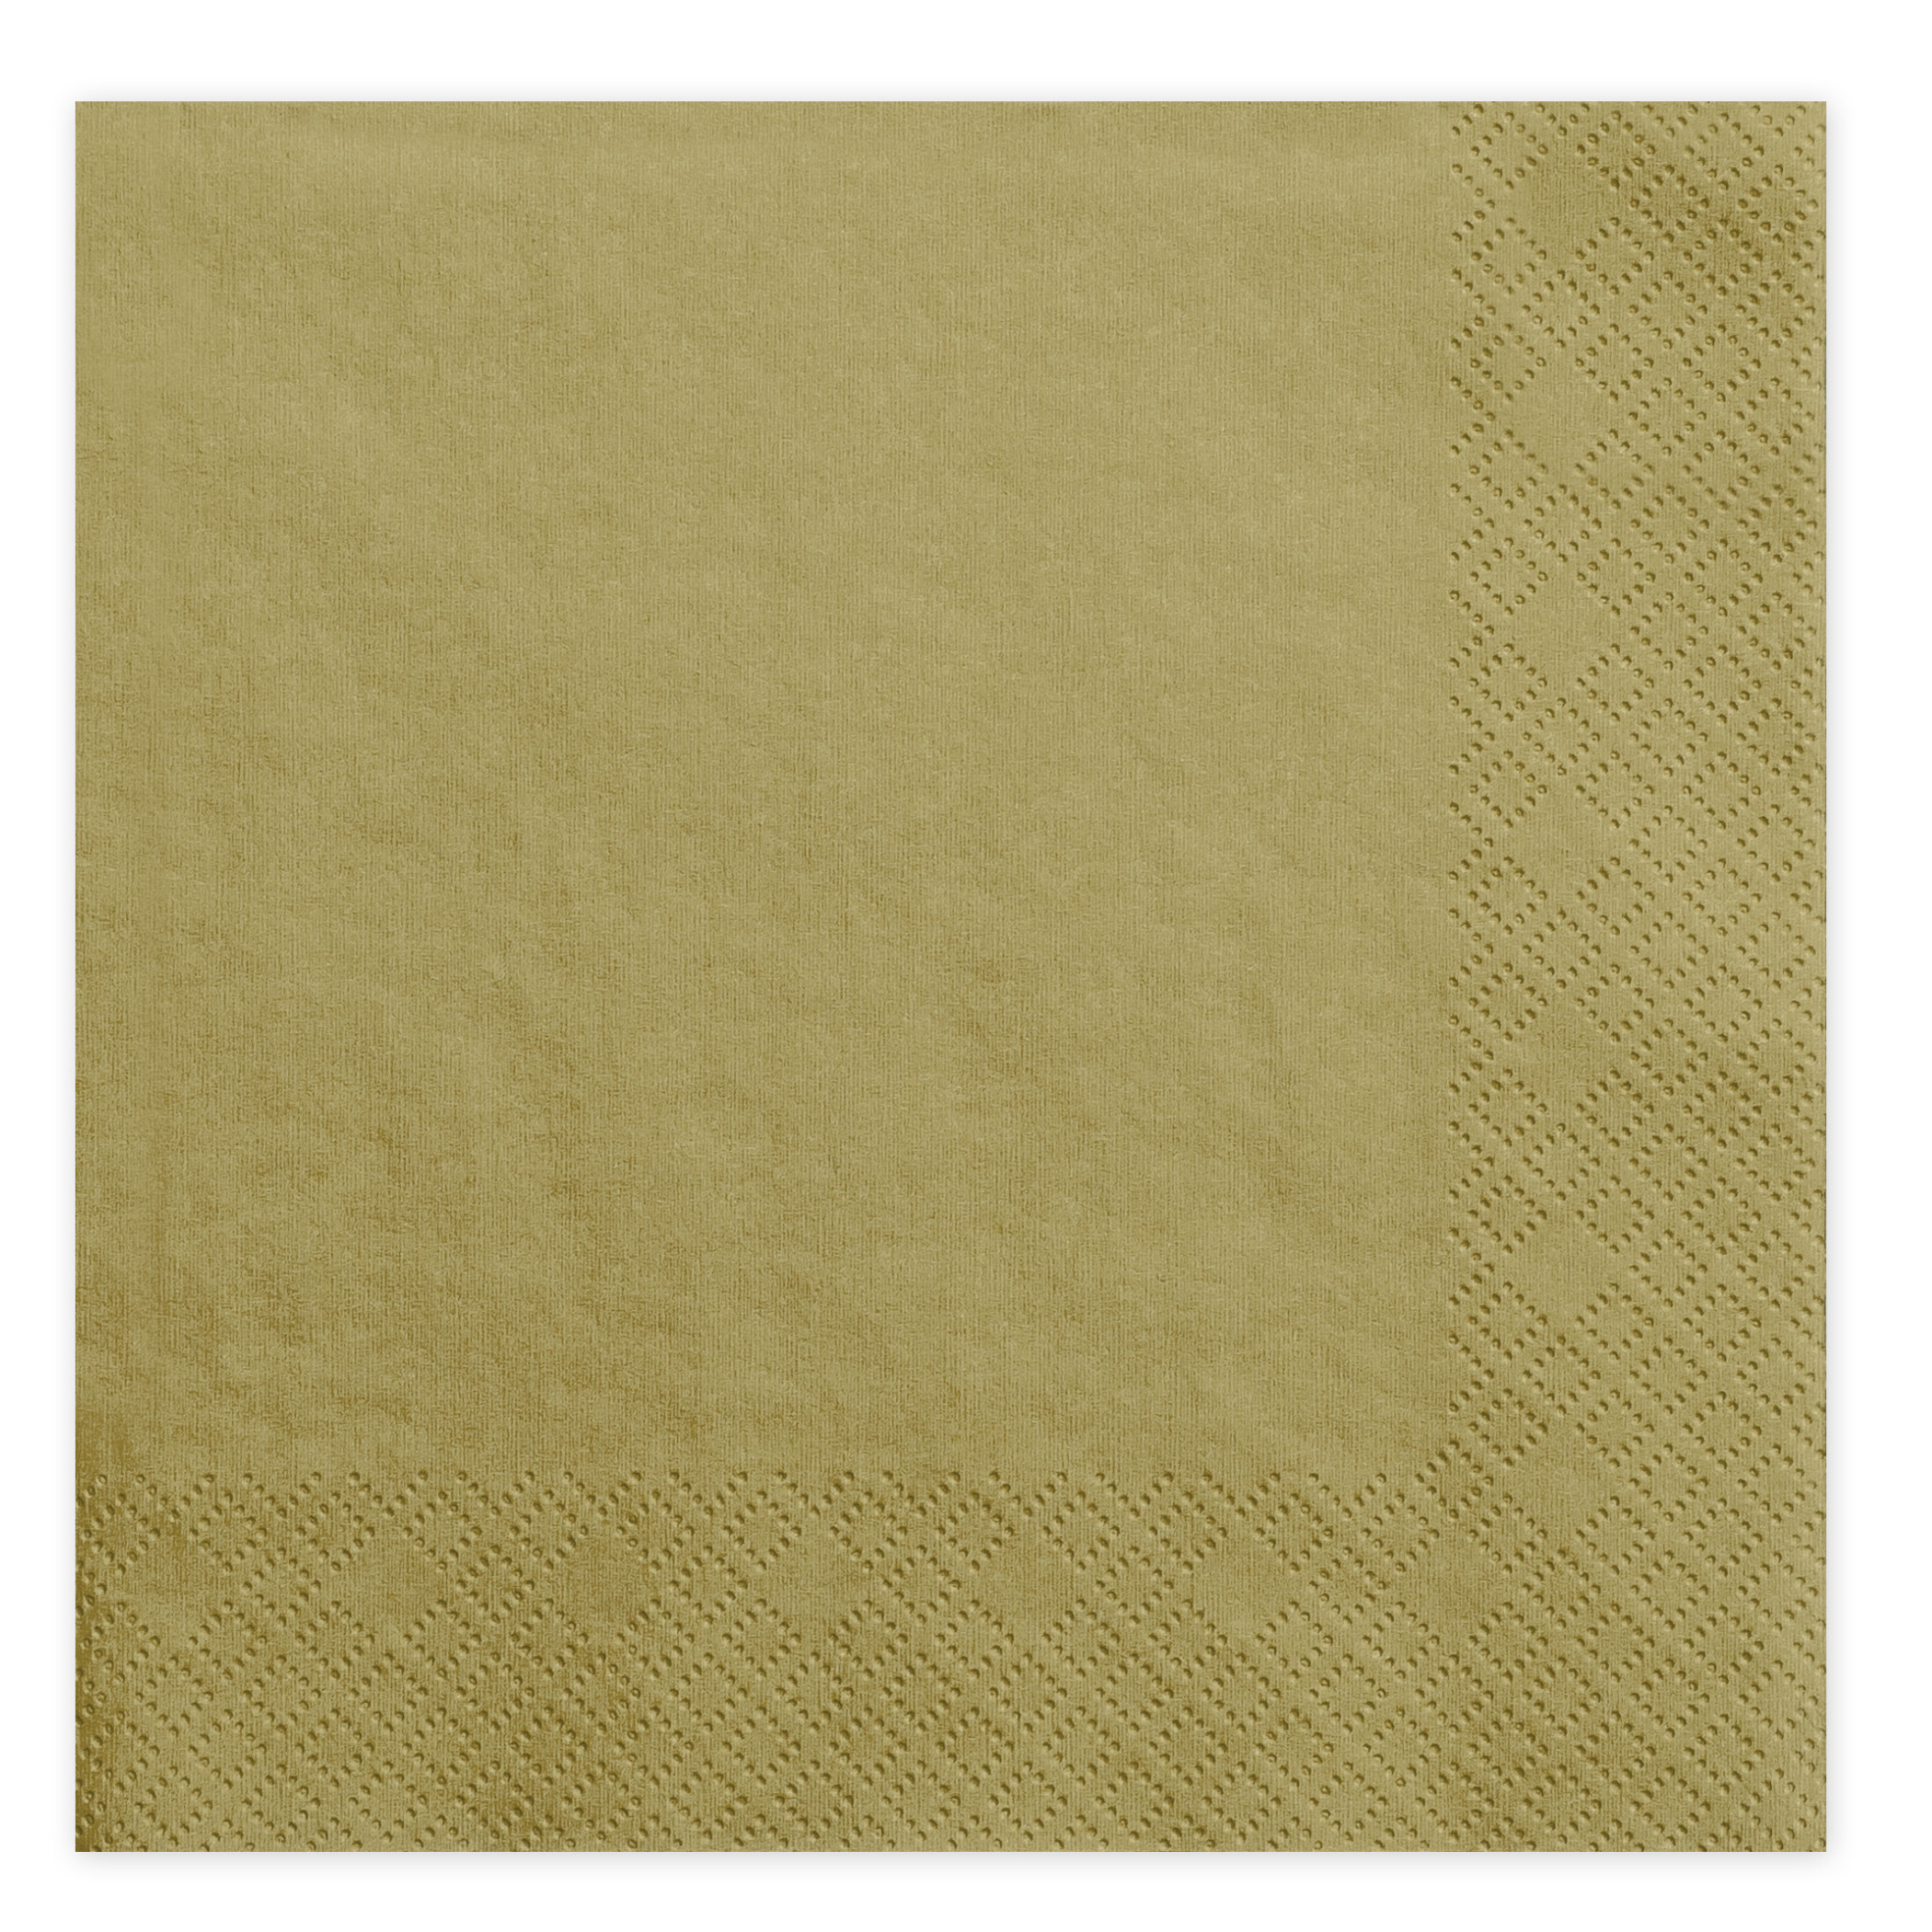 40x Papieren tafel servetten goud kleurig 33 x 33 cm